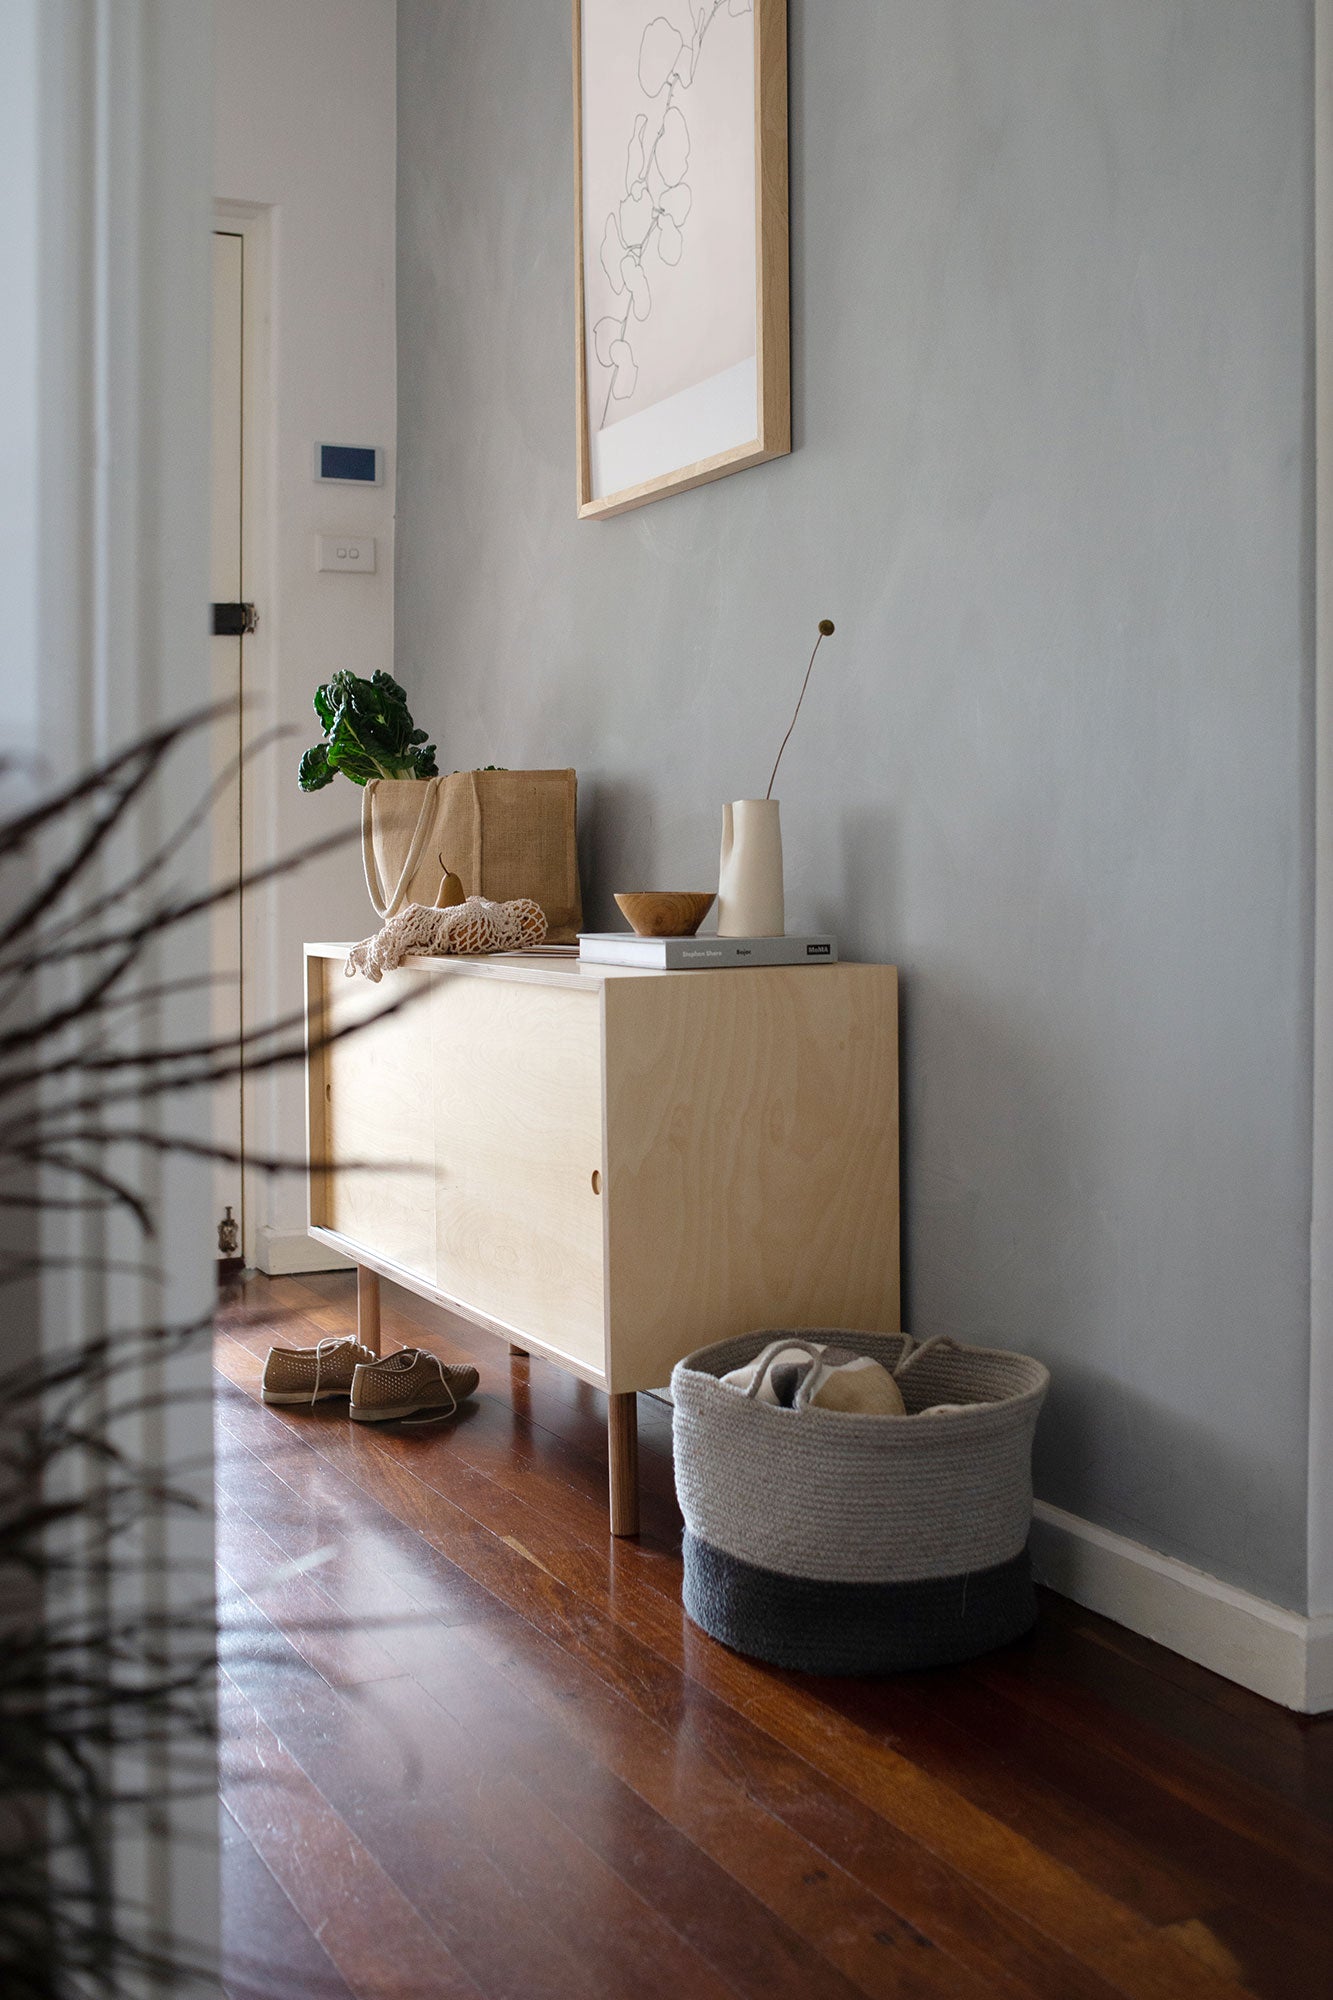 Australian Made minimalist furniture Cabine Meghan Plowman